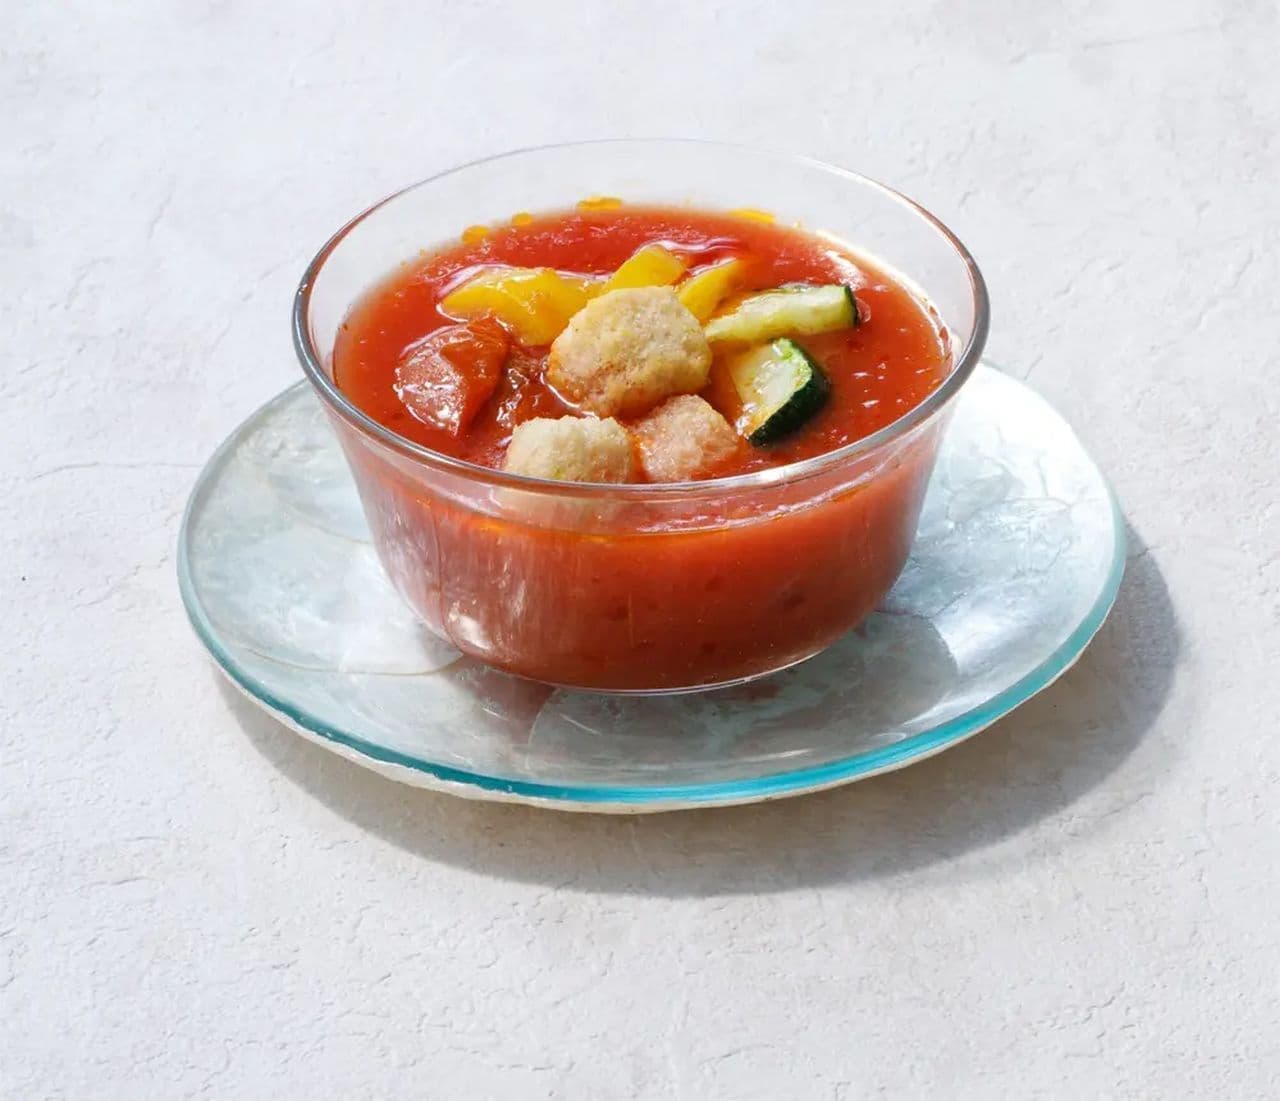 KINOKUNIYA "Refreshing Gazpacho with Ripe Tomatoes and Summer Vegetables